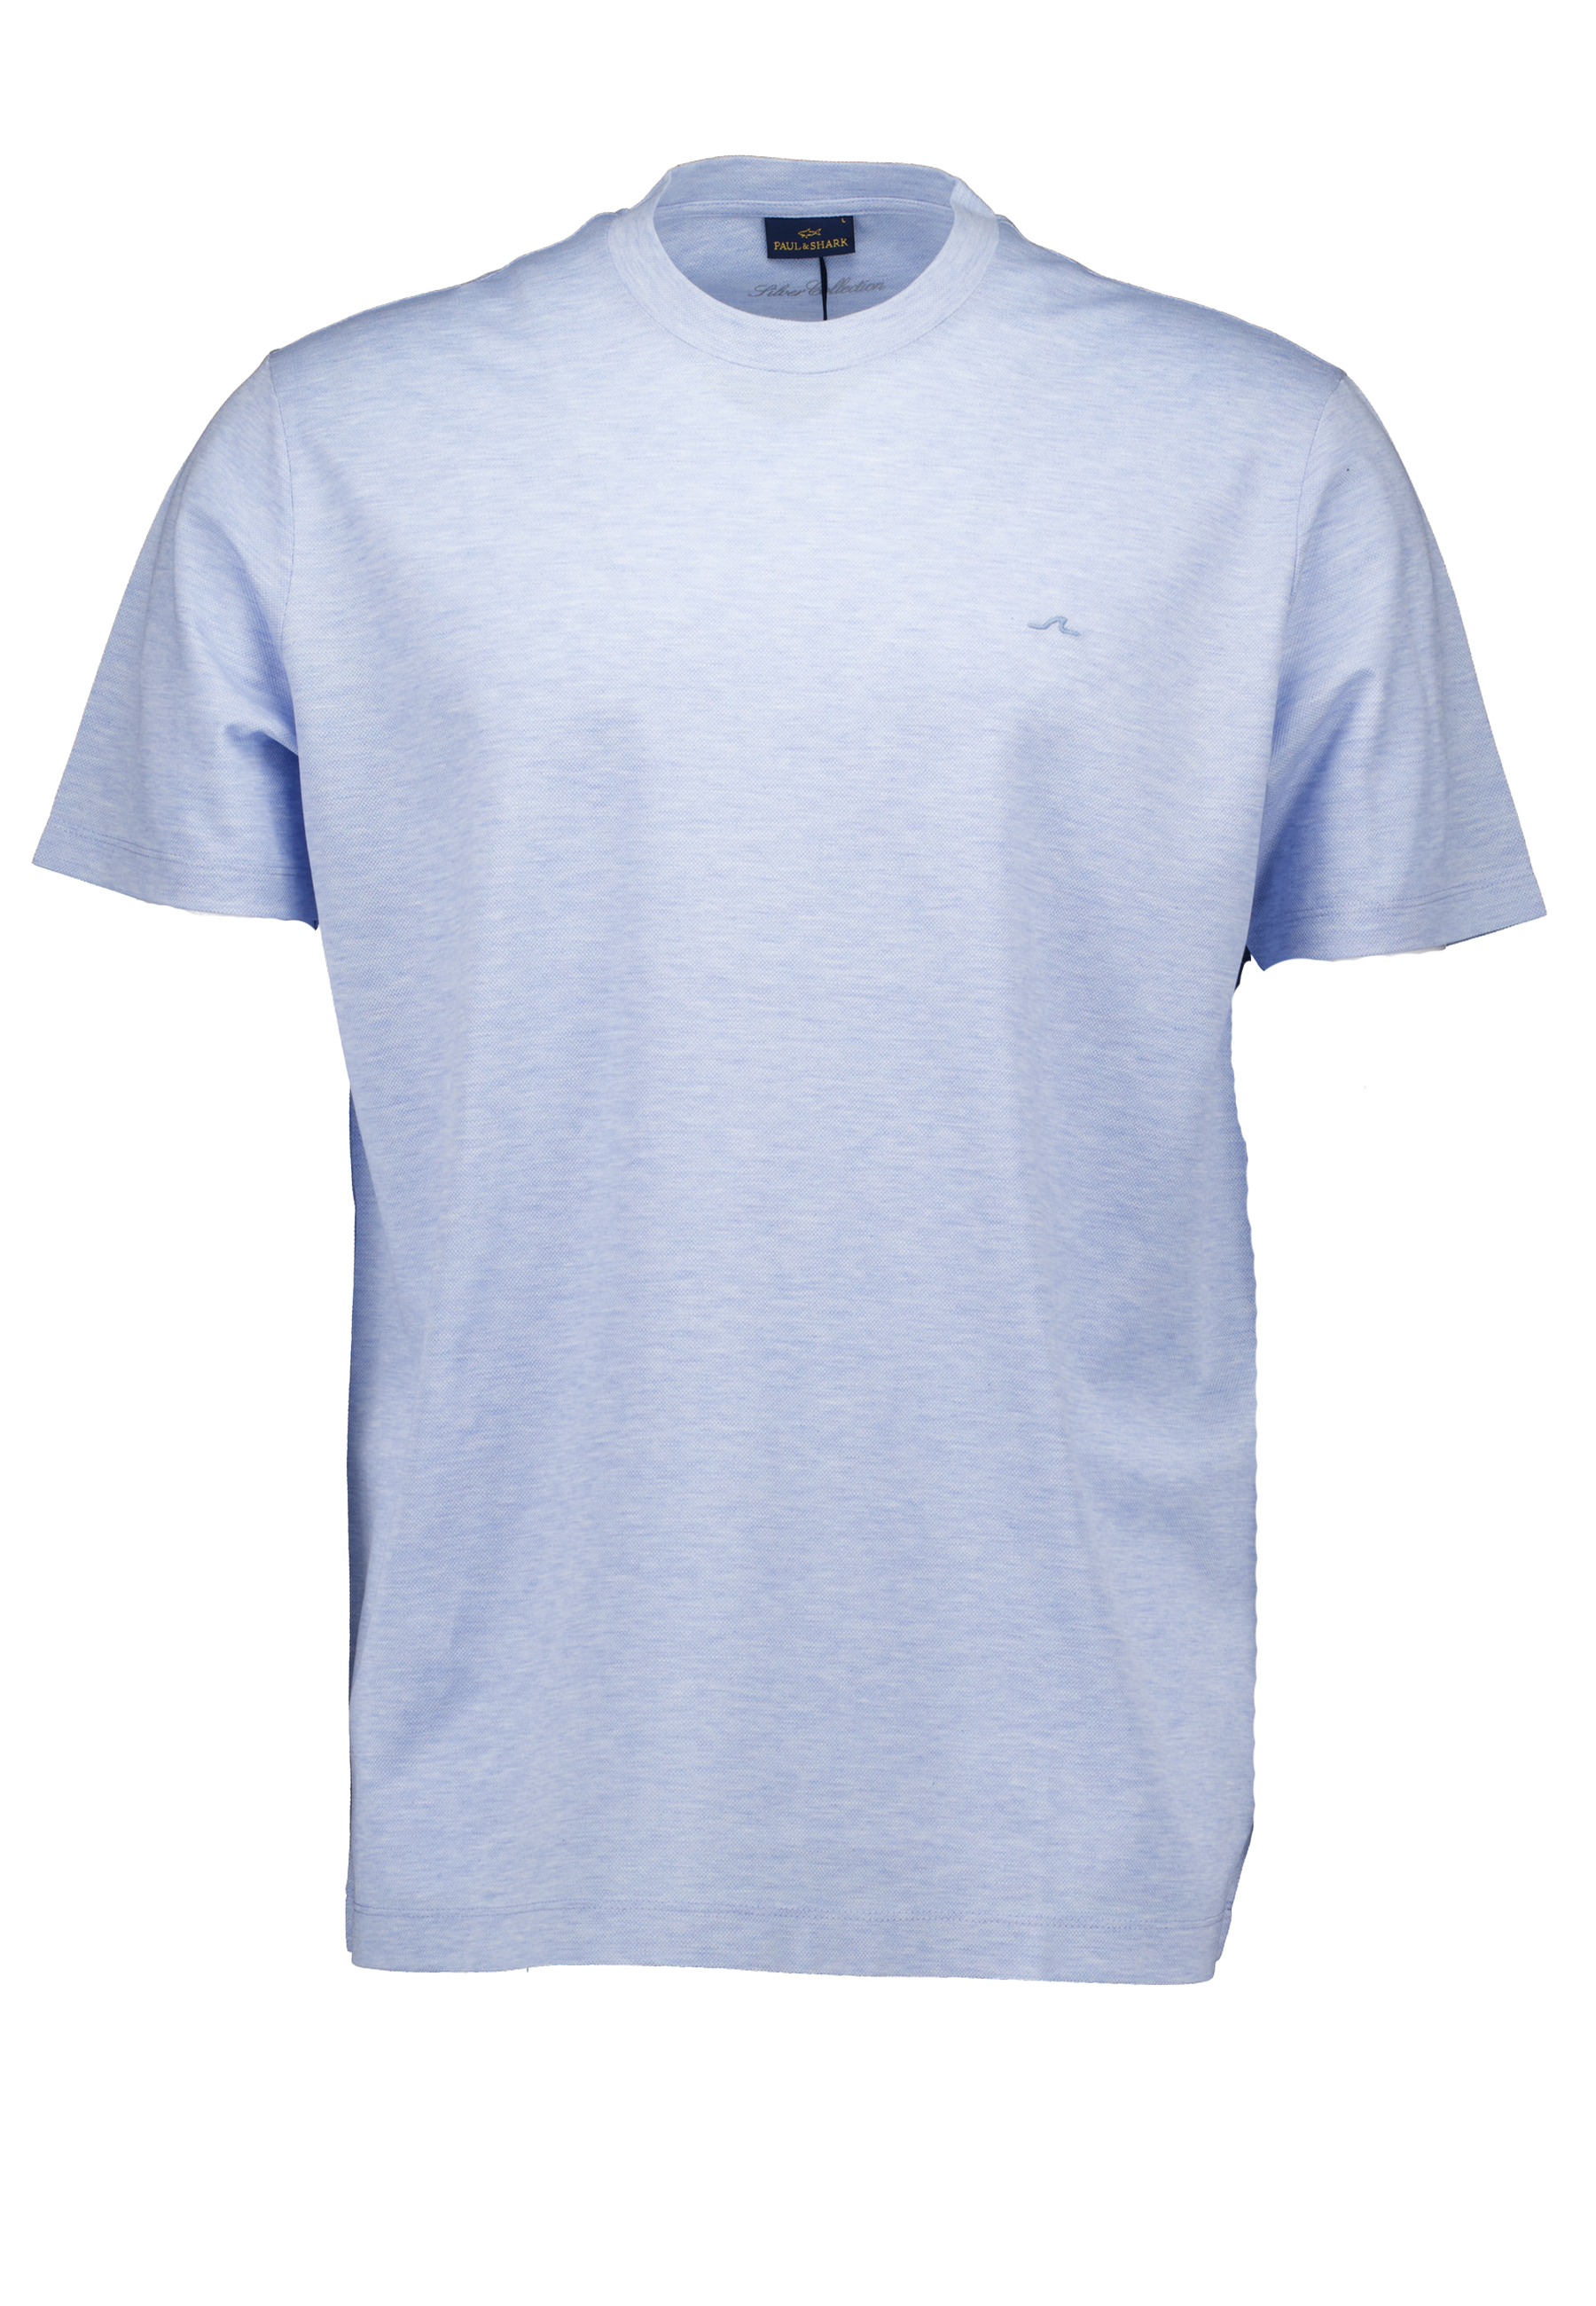 Paul & Shark Shirt Blauw maat XXL Silver collection t-shirts blauw